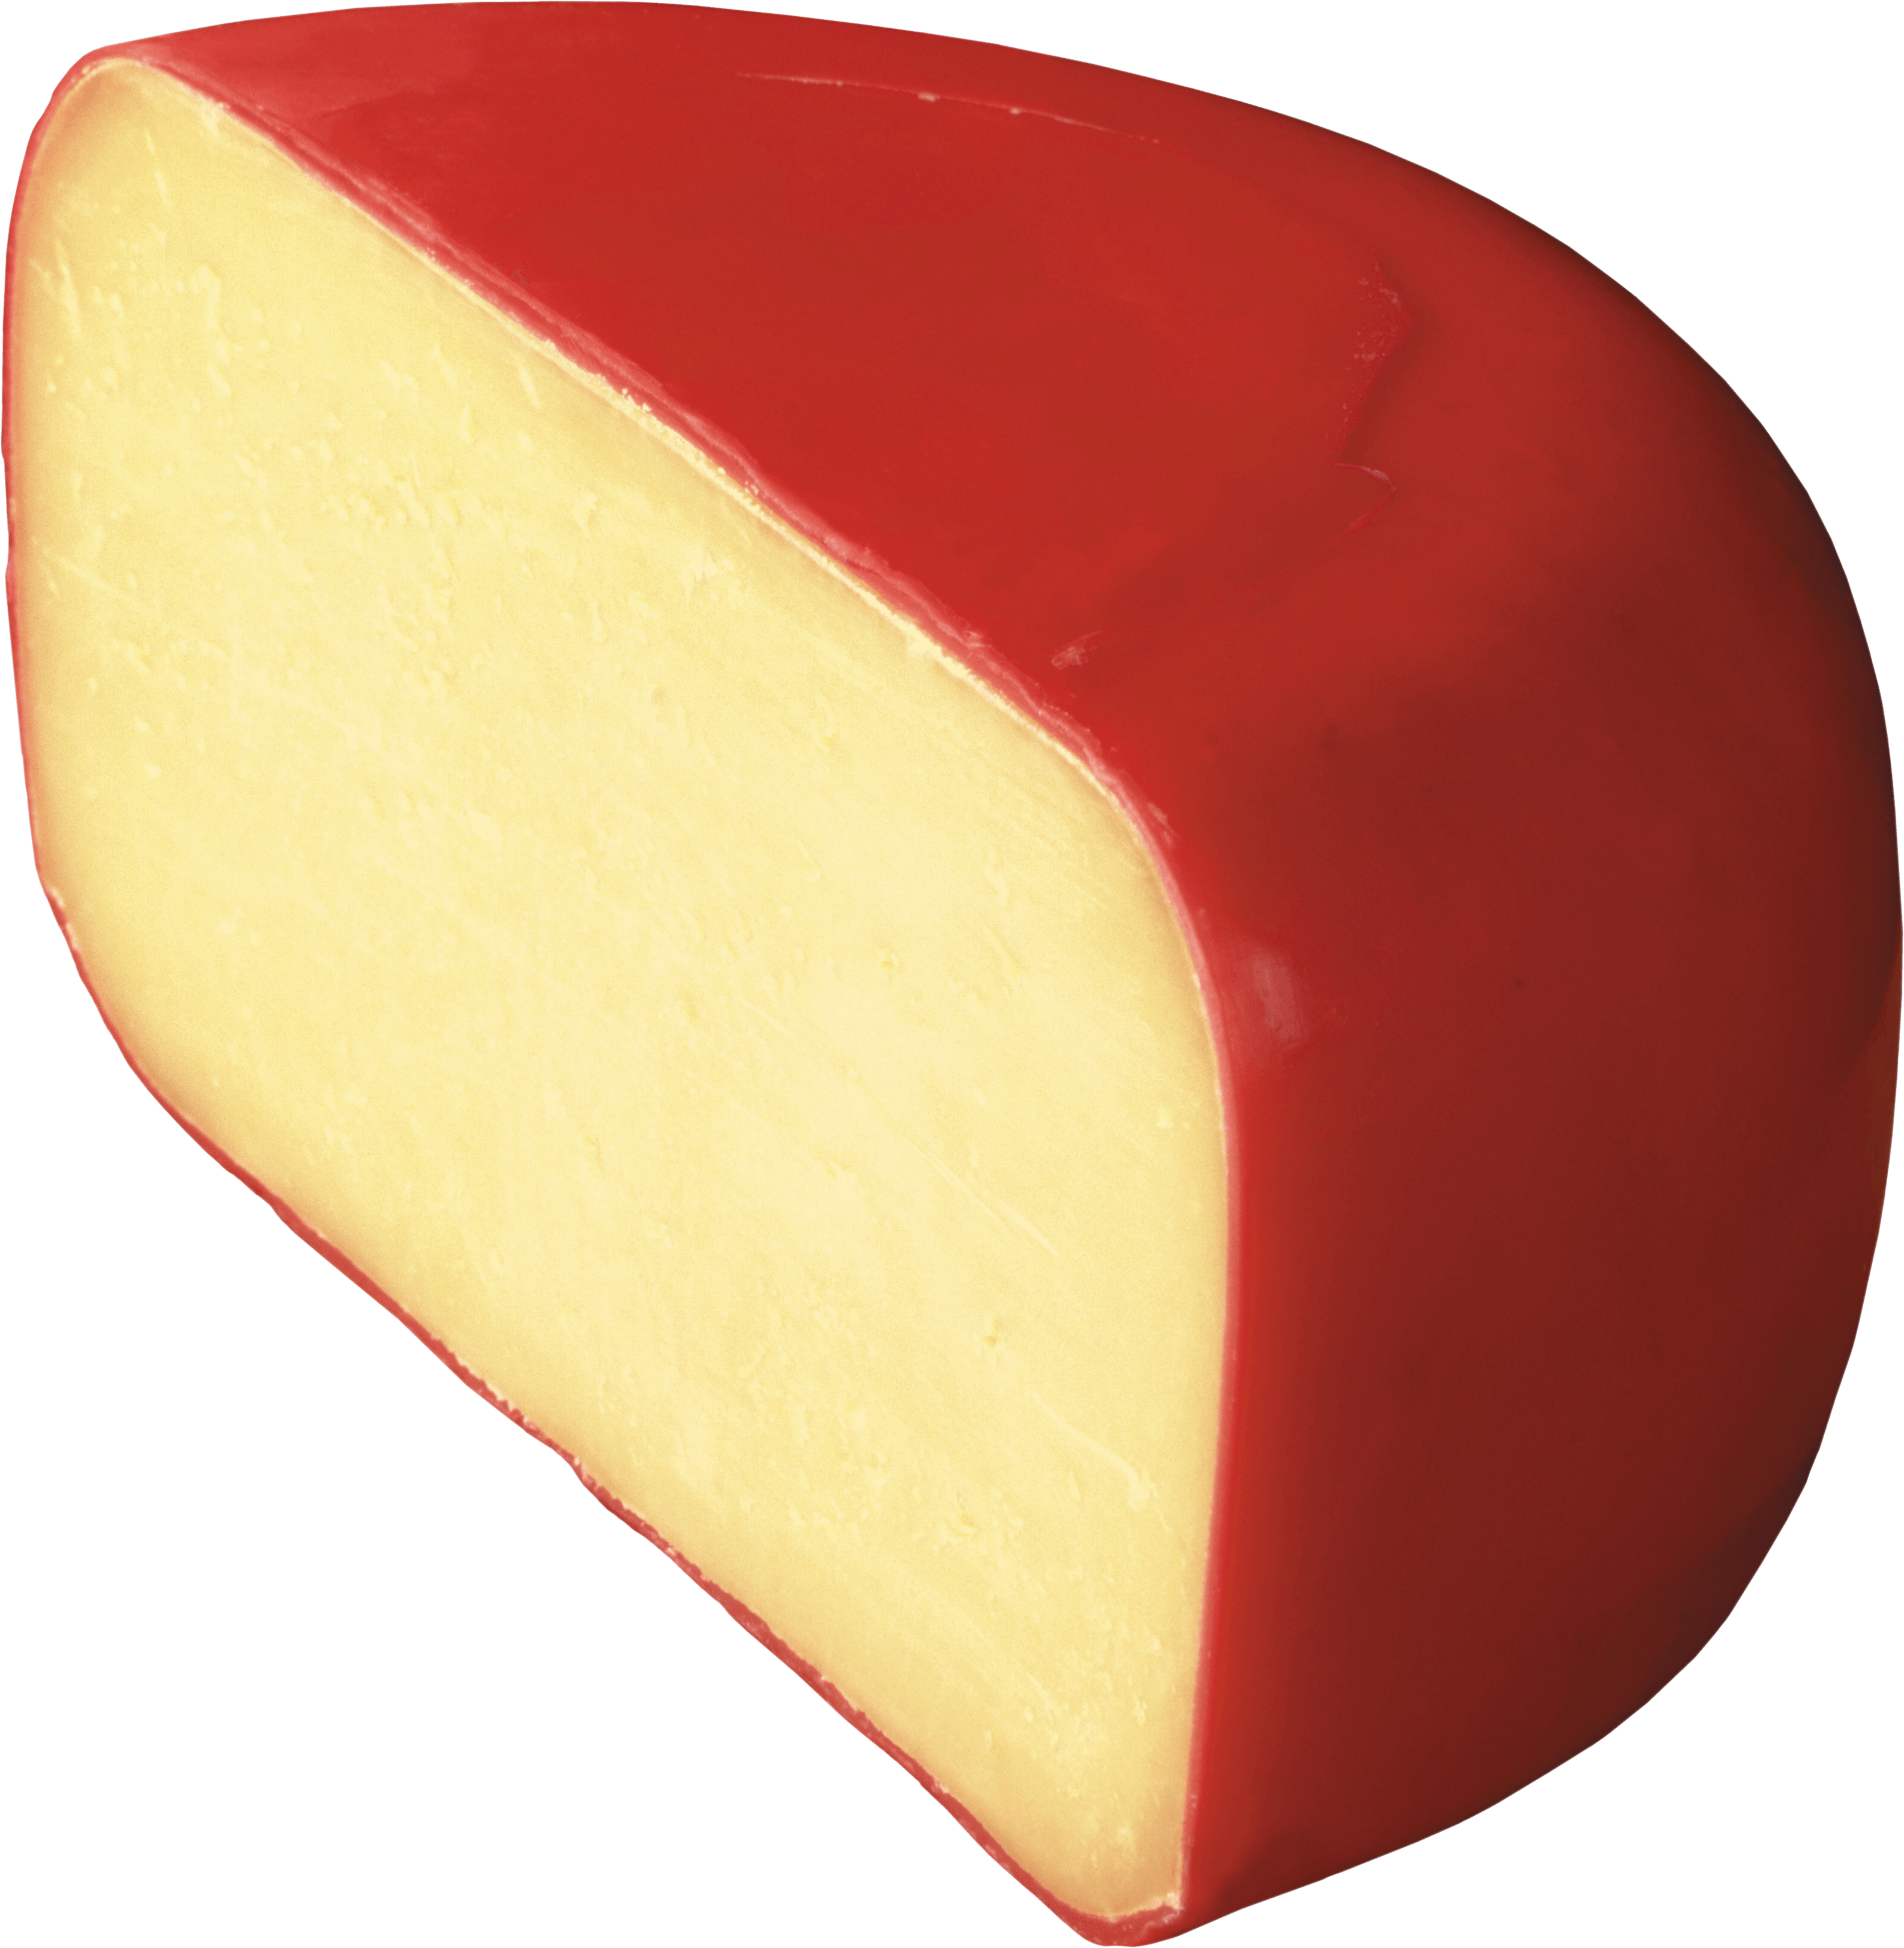 Download Holland Cheese Png Image HQ PNG Image | FreePNGImg